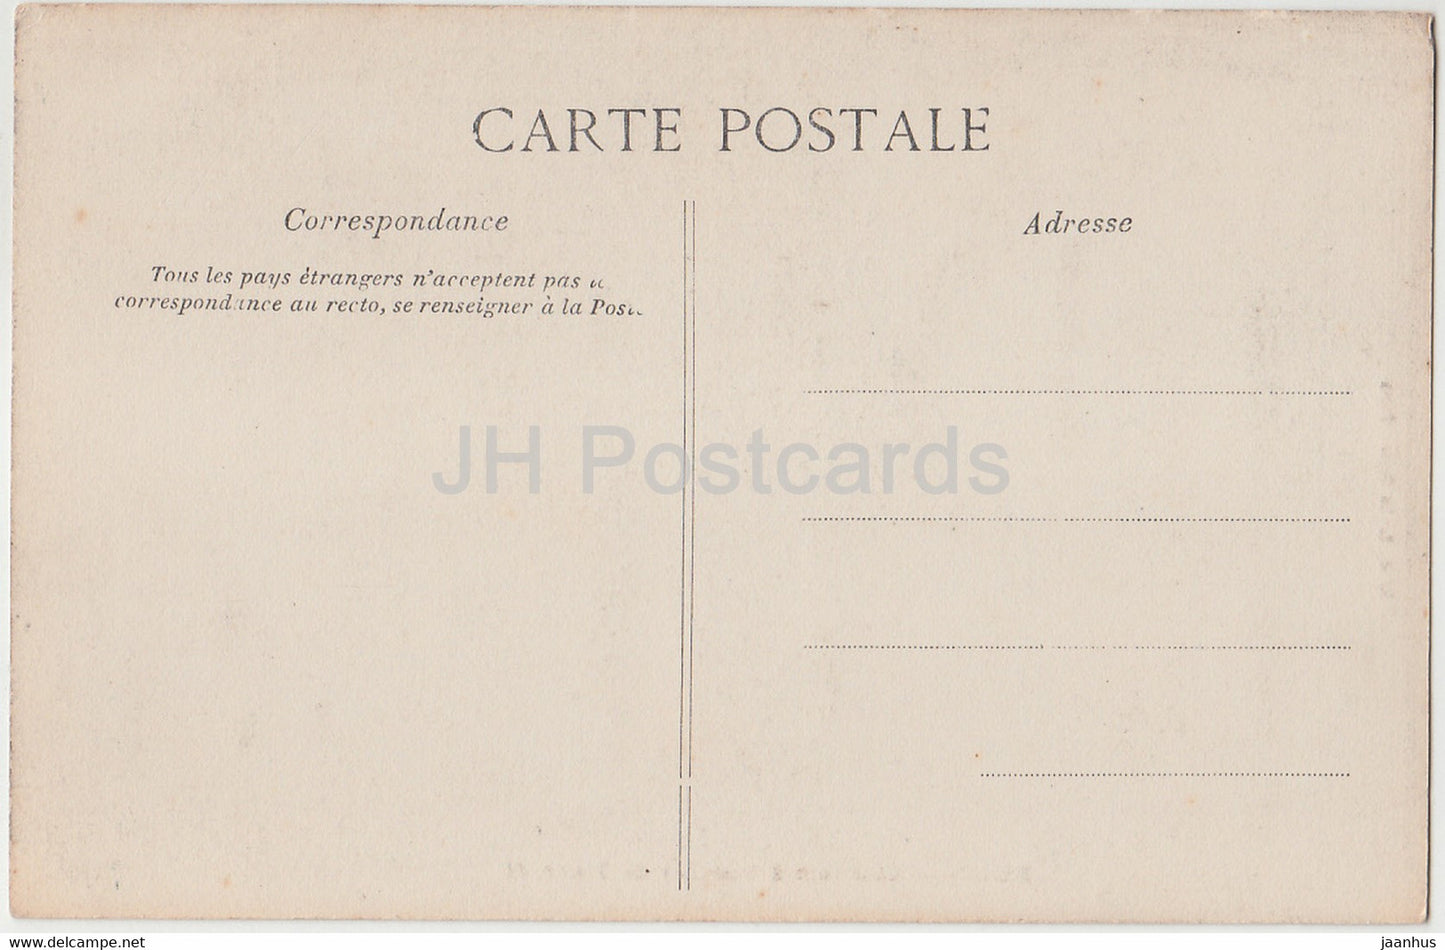 Blois - Chambre a Coucher de Henri II - Schloss - alte Postkarte - Frankreich - unbenutzt